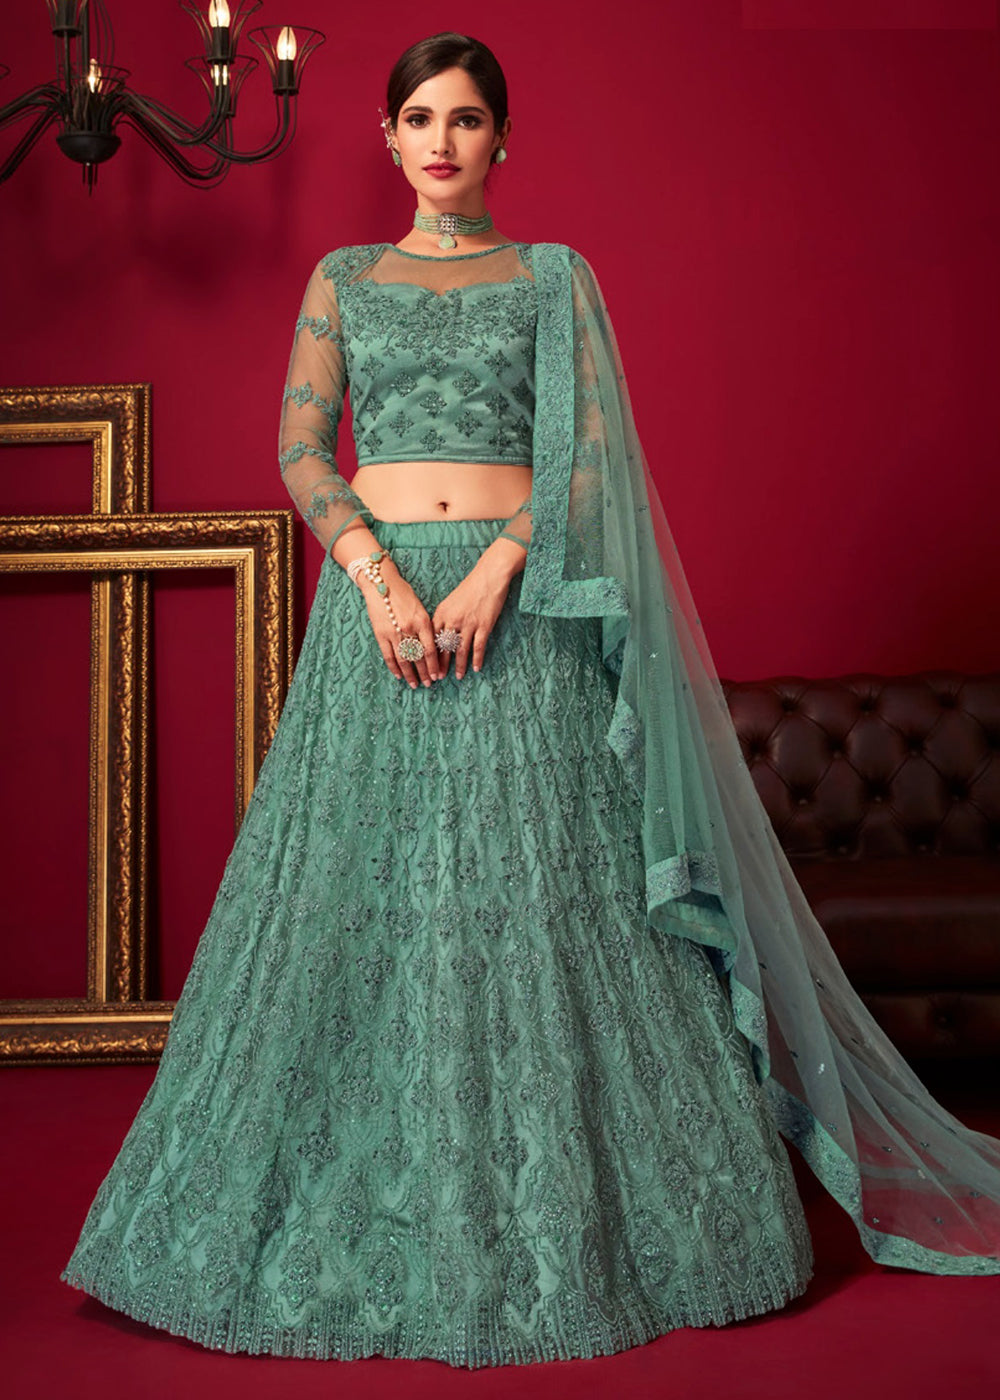 Buy Now Bridal Sea Green Resham & Stone Embroidered Wedding Lehenga Choli Online in USA, UK, Canada & Worldwide at Empress Clothing. 